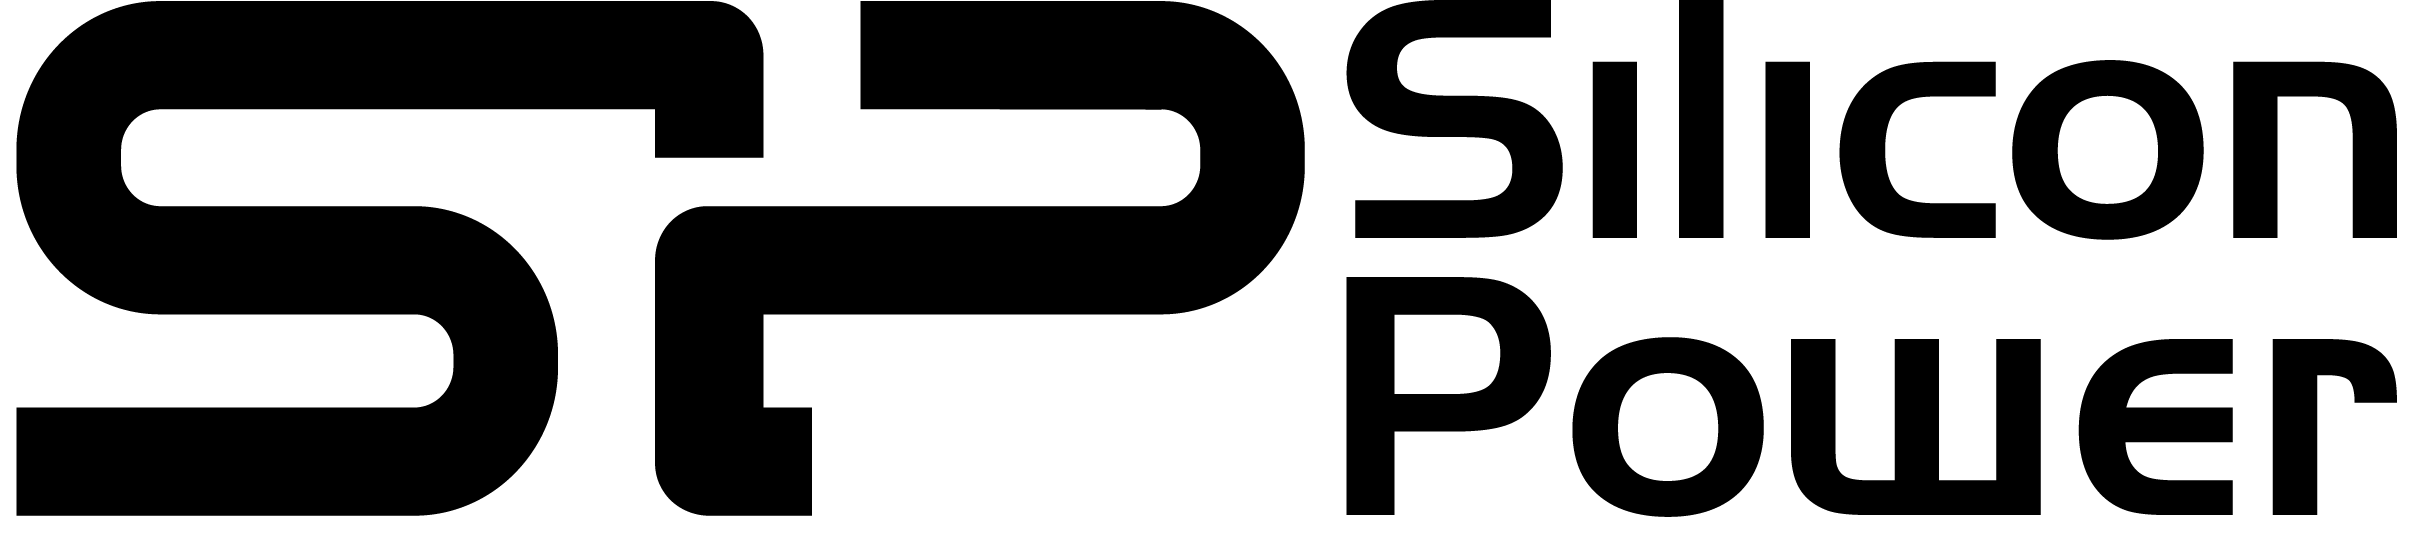 Silicon Power Logo photo - 1